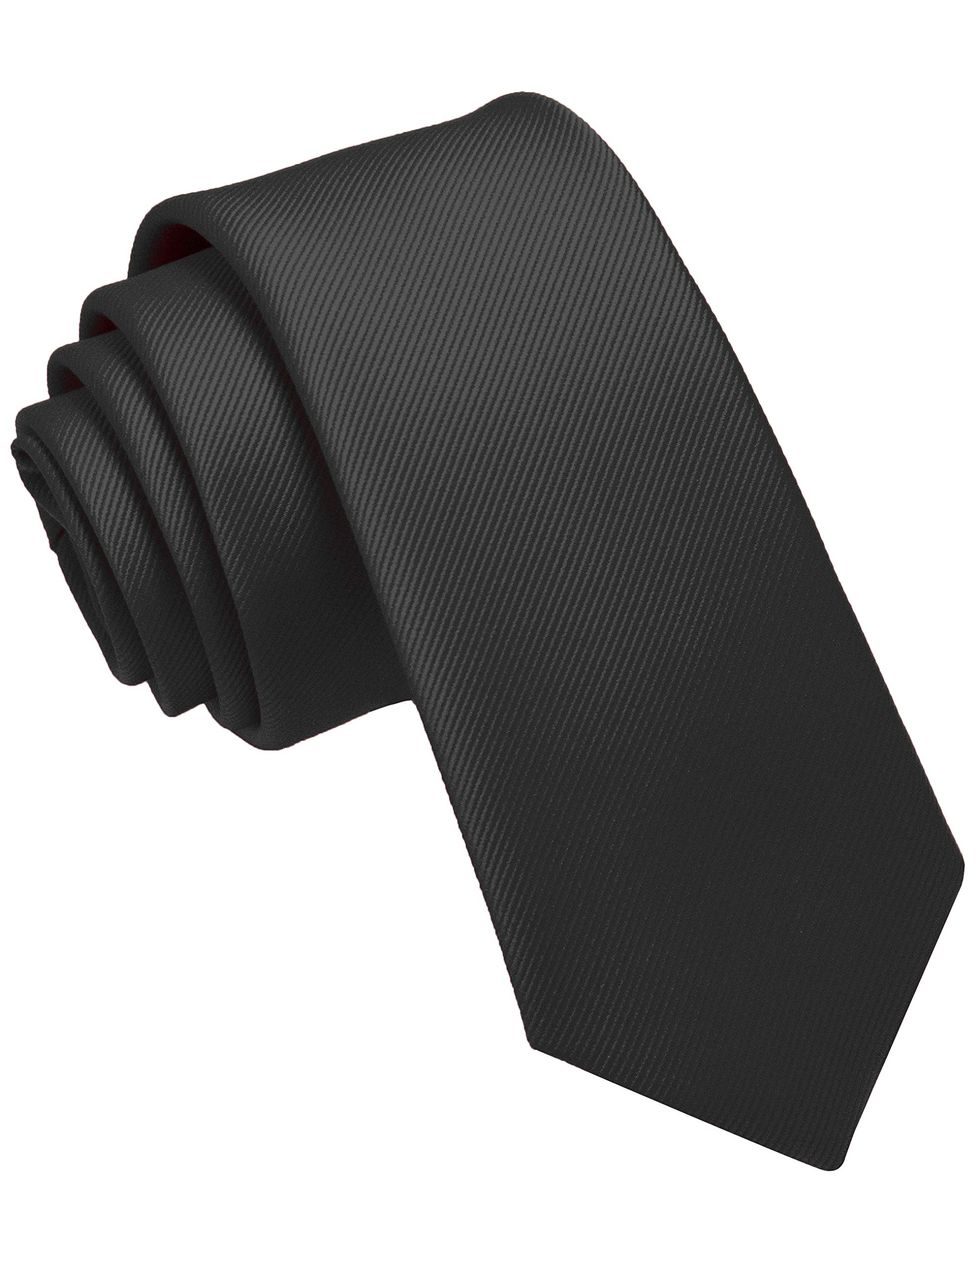  Black Tie Silk Skinny Tie